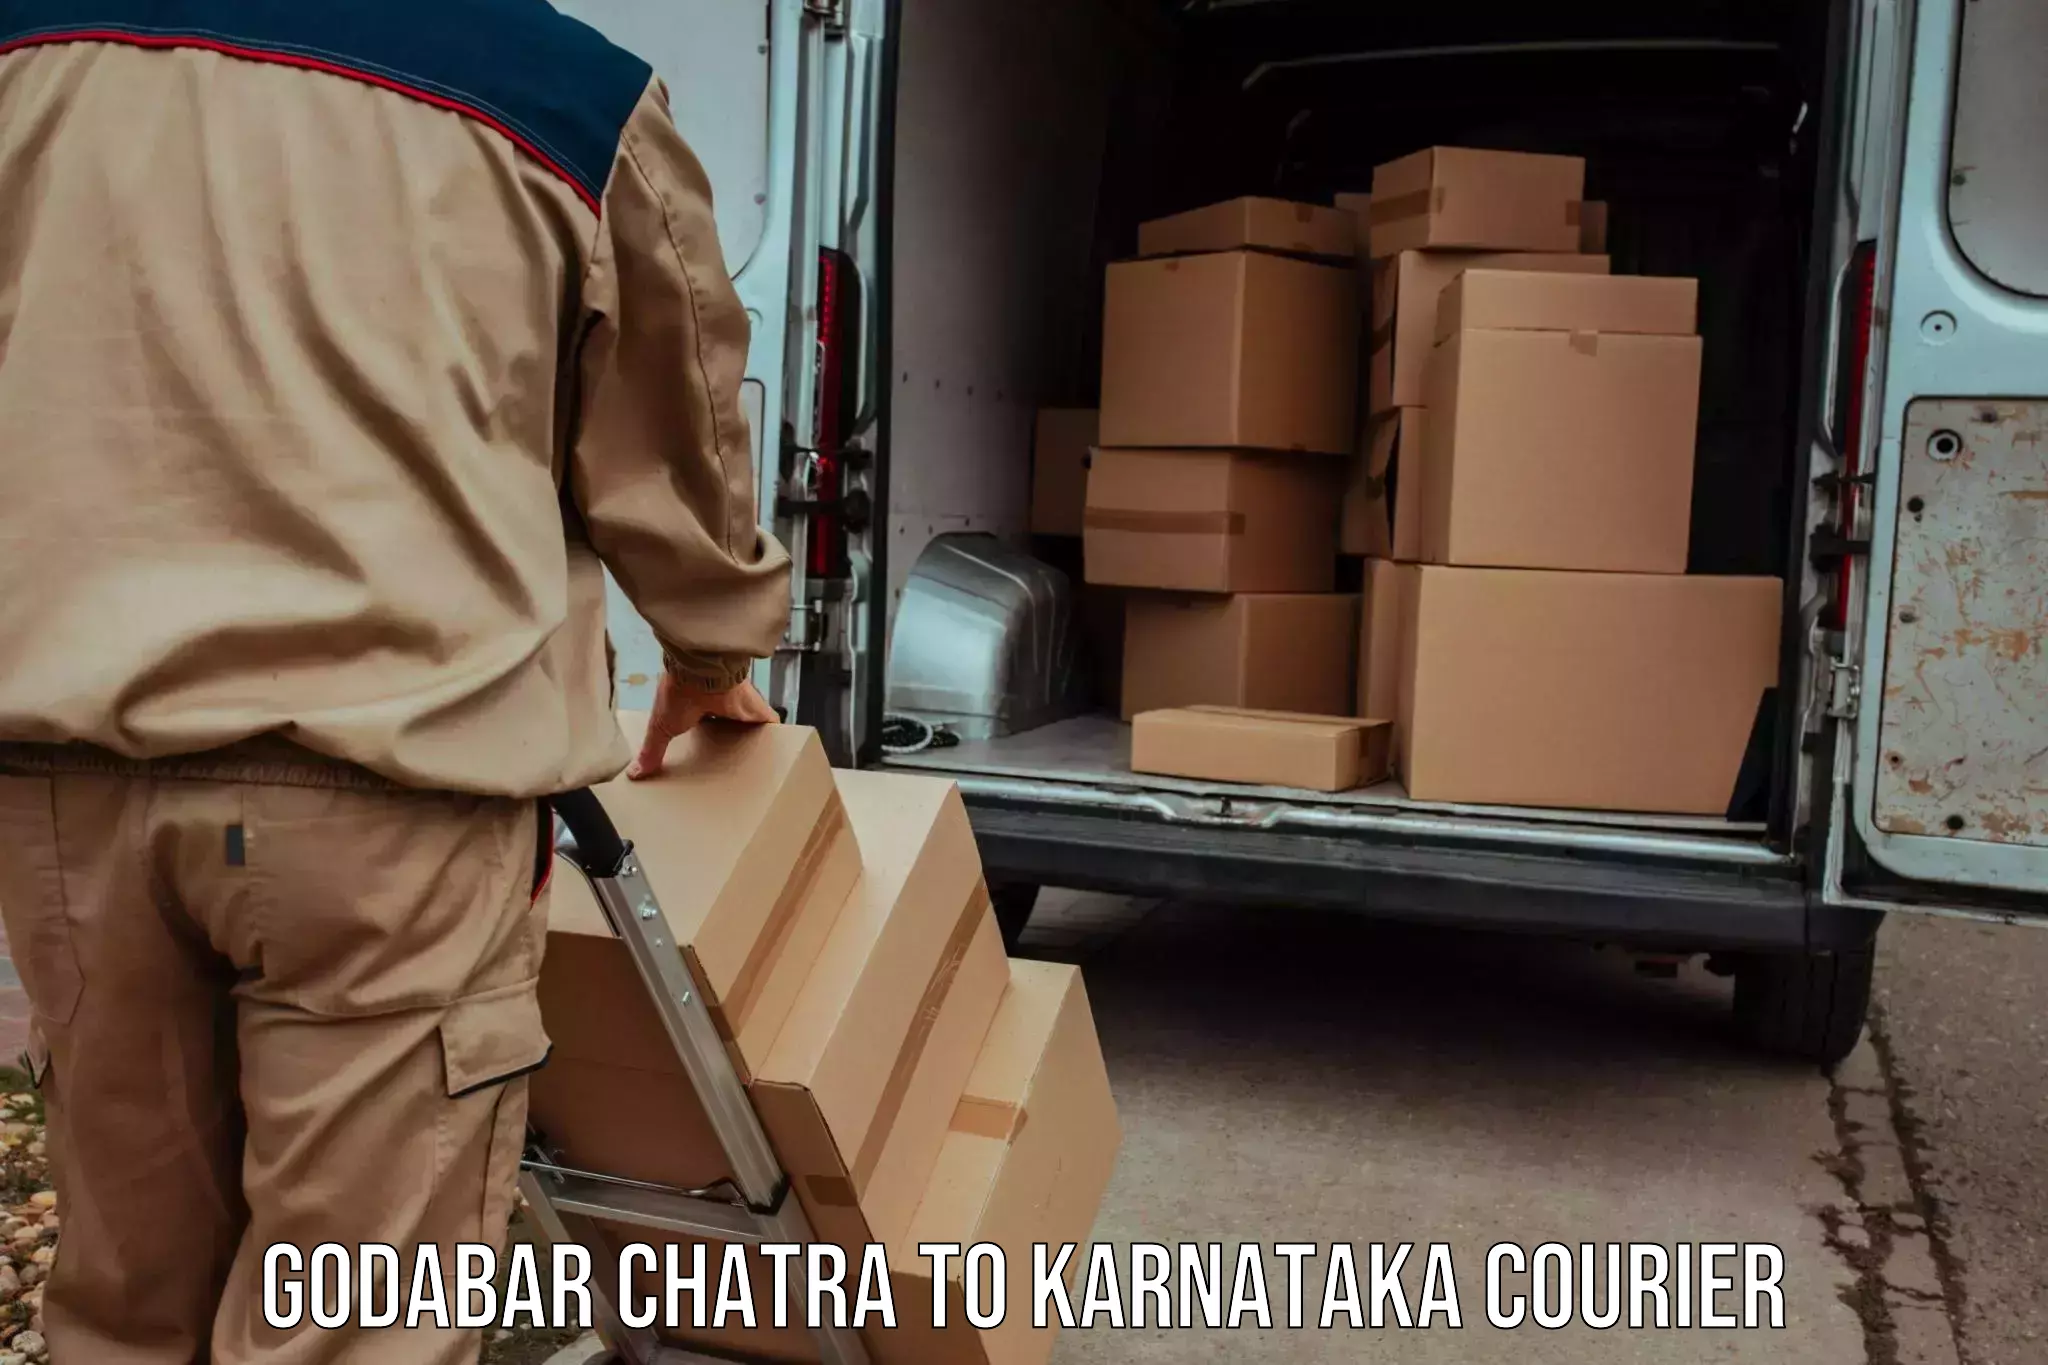 Courier service innovation Godabar Chatra to Karnataka